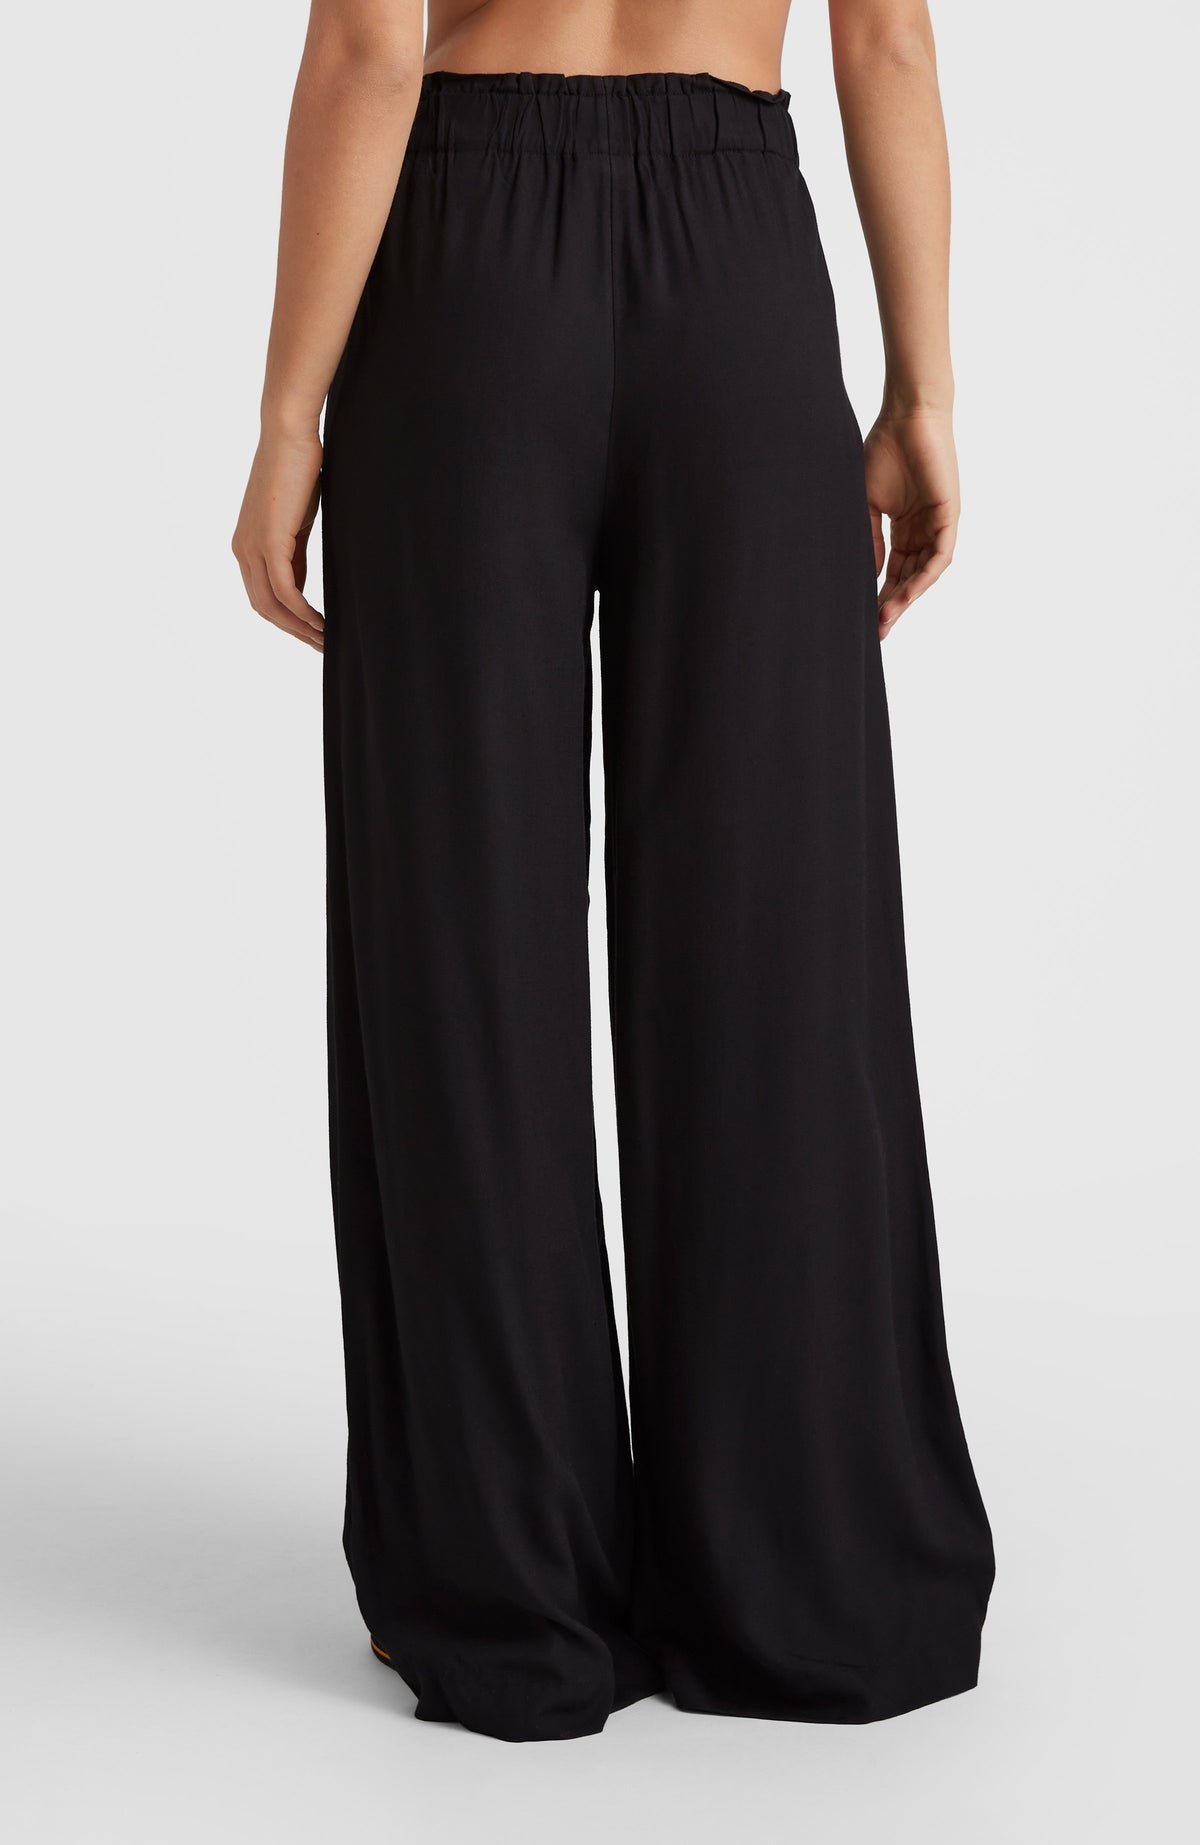 ASOS DESIGN crinkle wide leg palazzo beach pants in black - ShopStyle